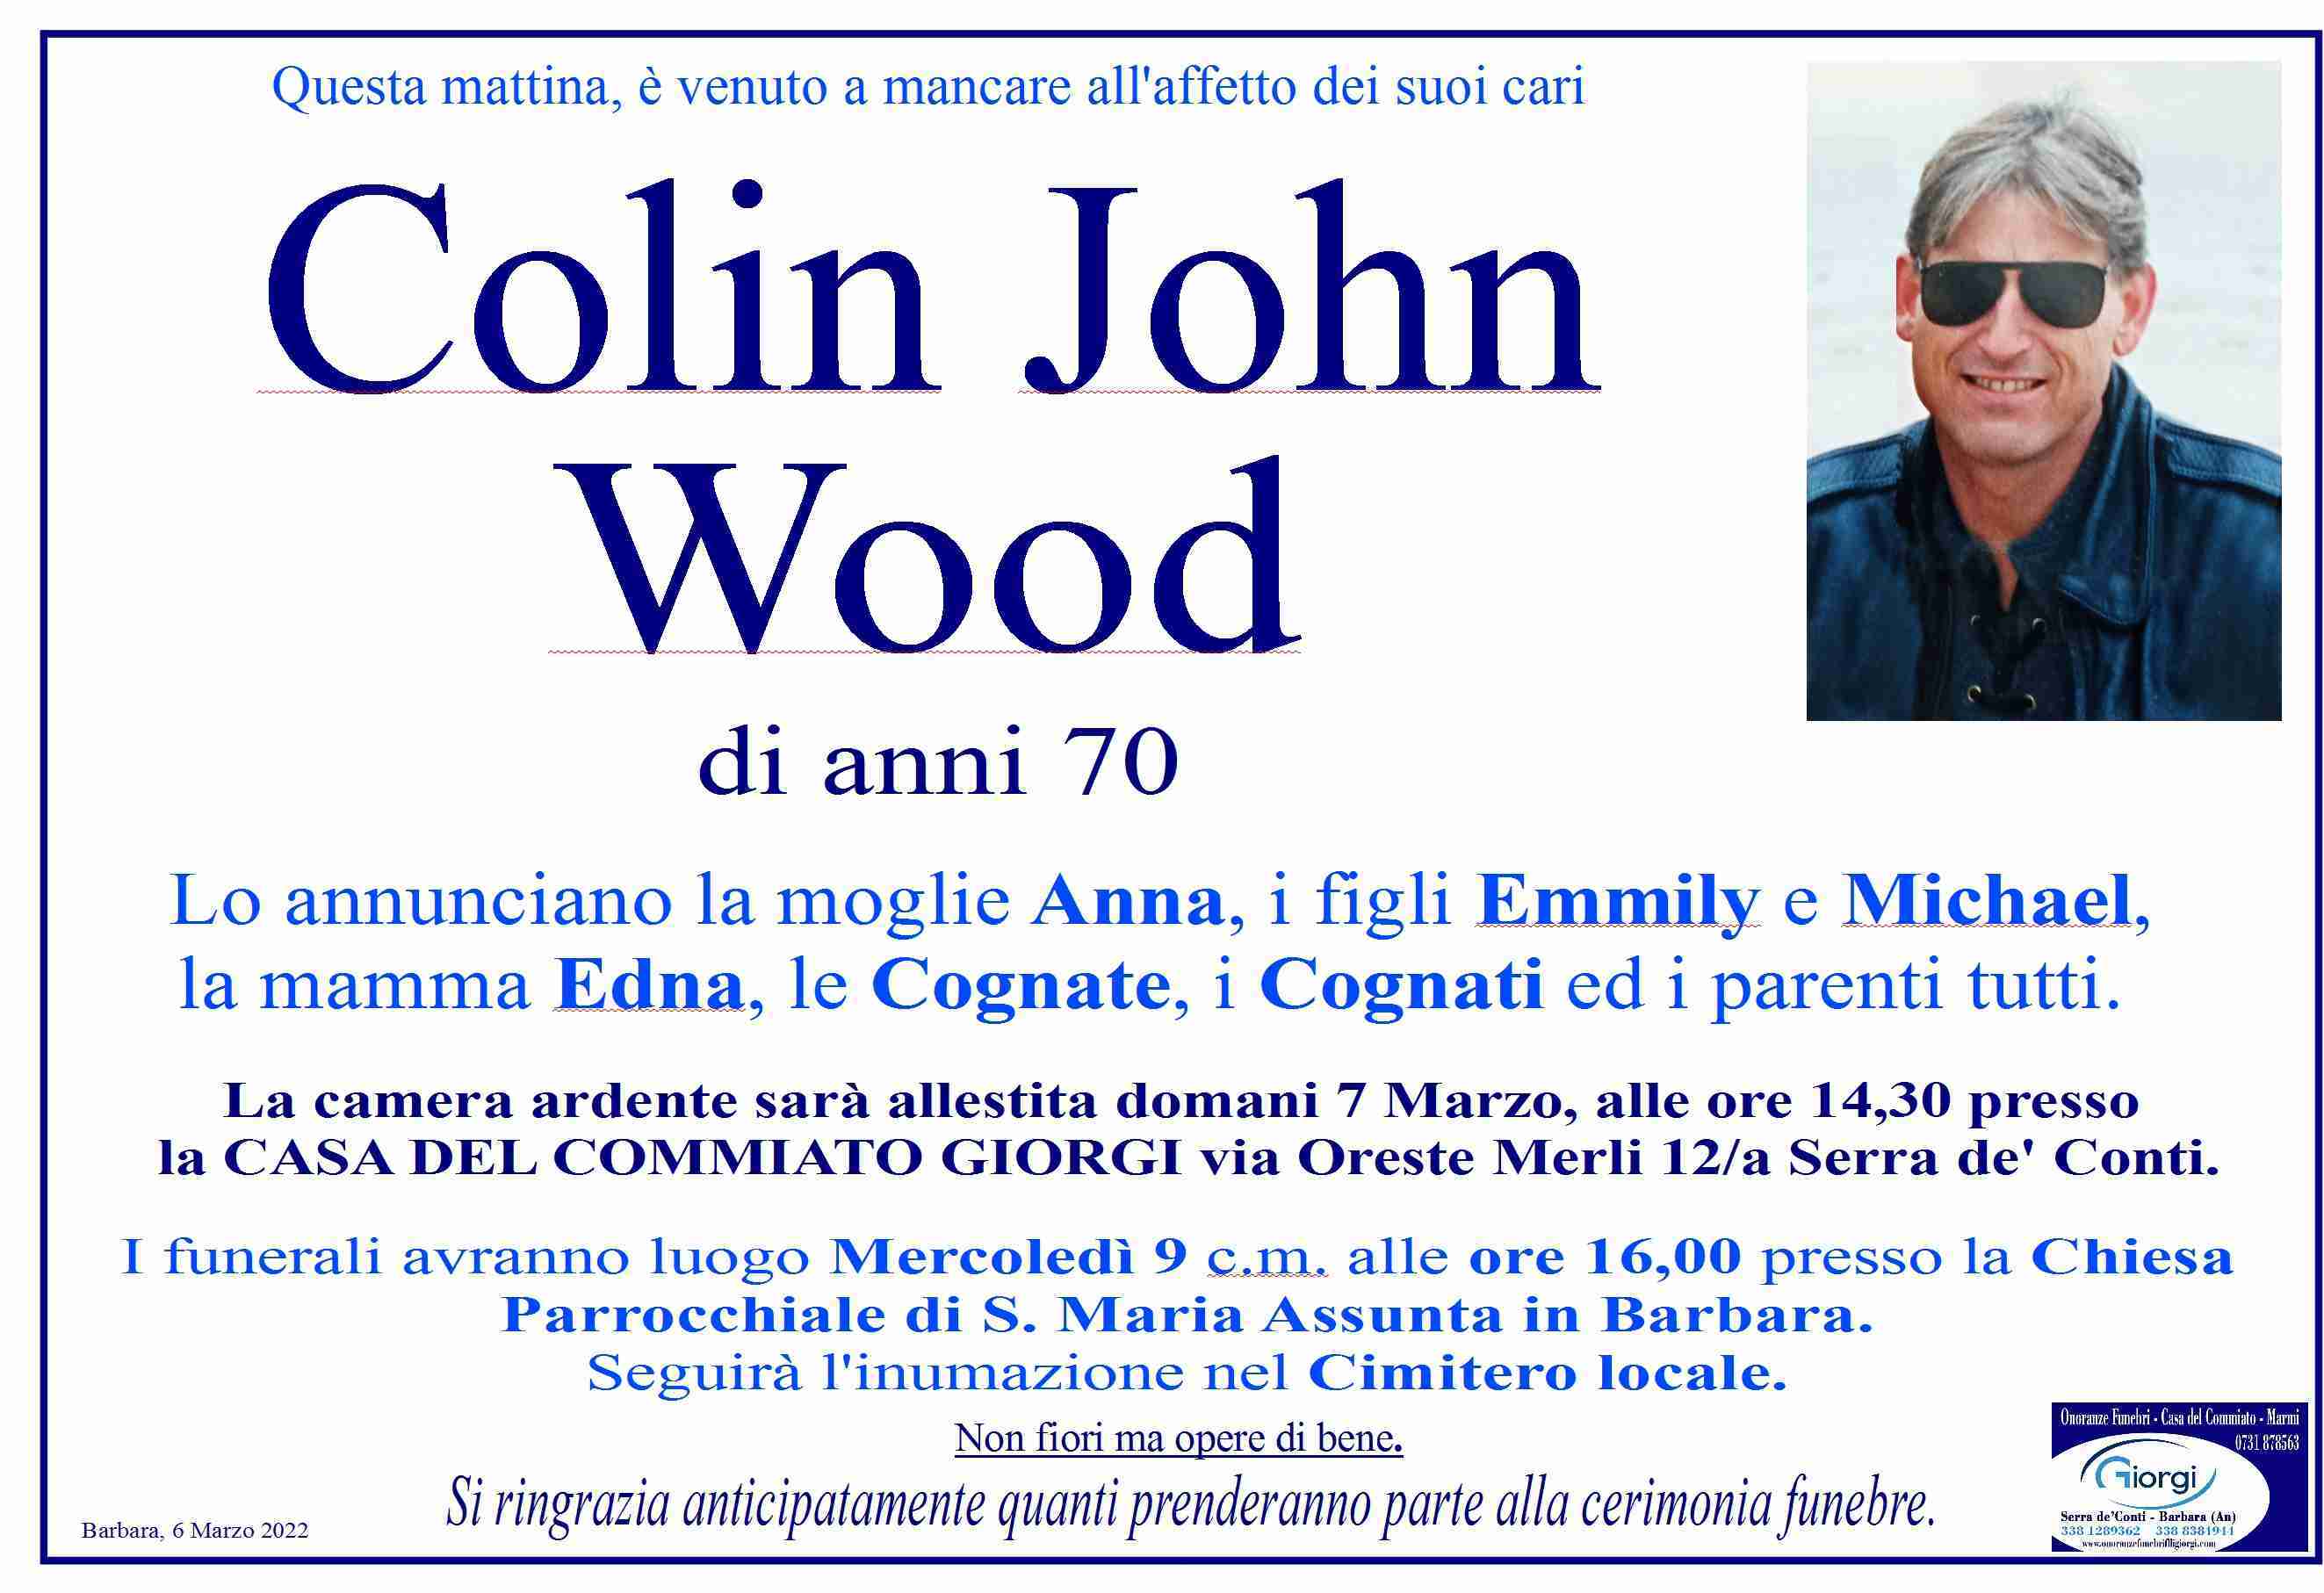 Colin John Wood